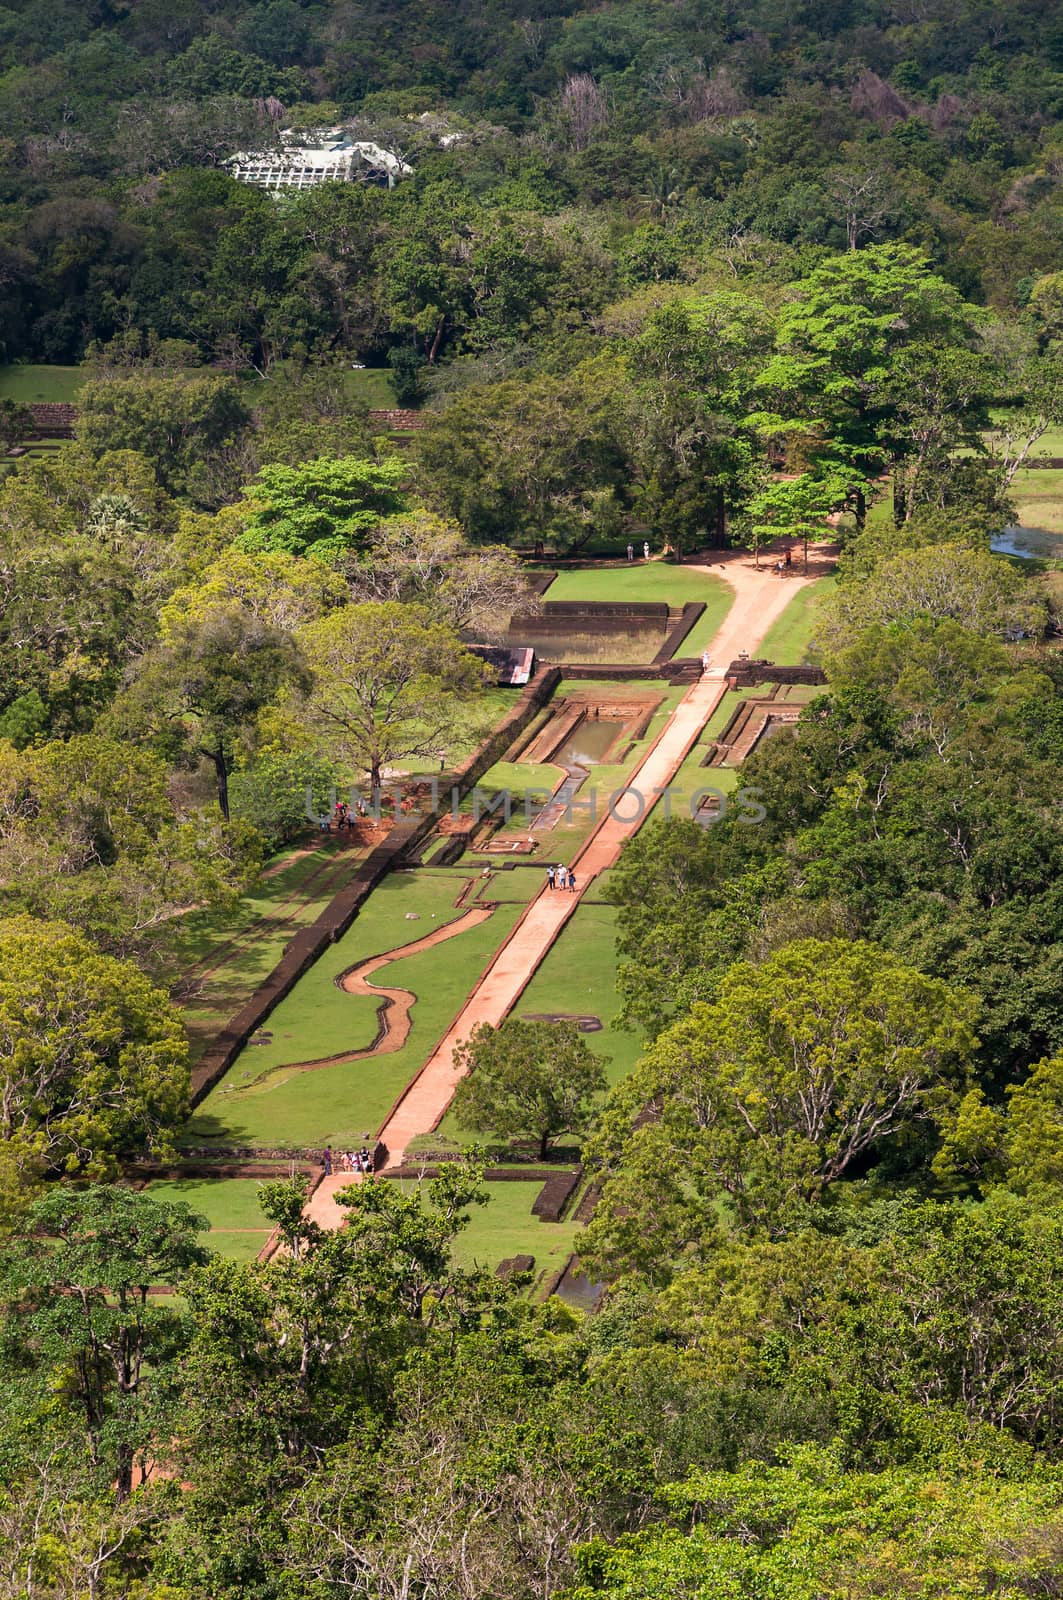 Sigiriya gardens - the oldest surviving historic gardens in Asia. View from the summit of the Sigiriya rock.